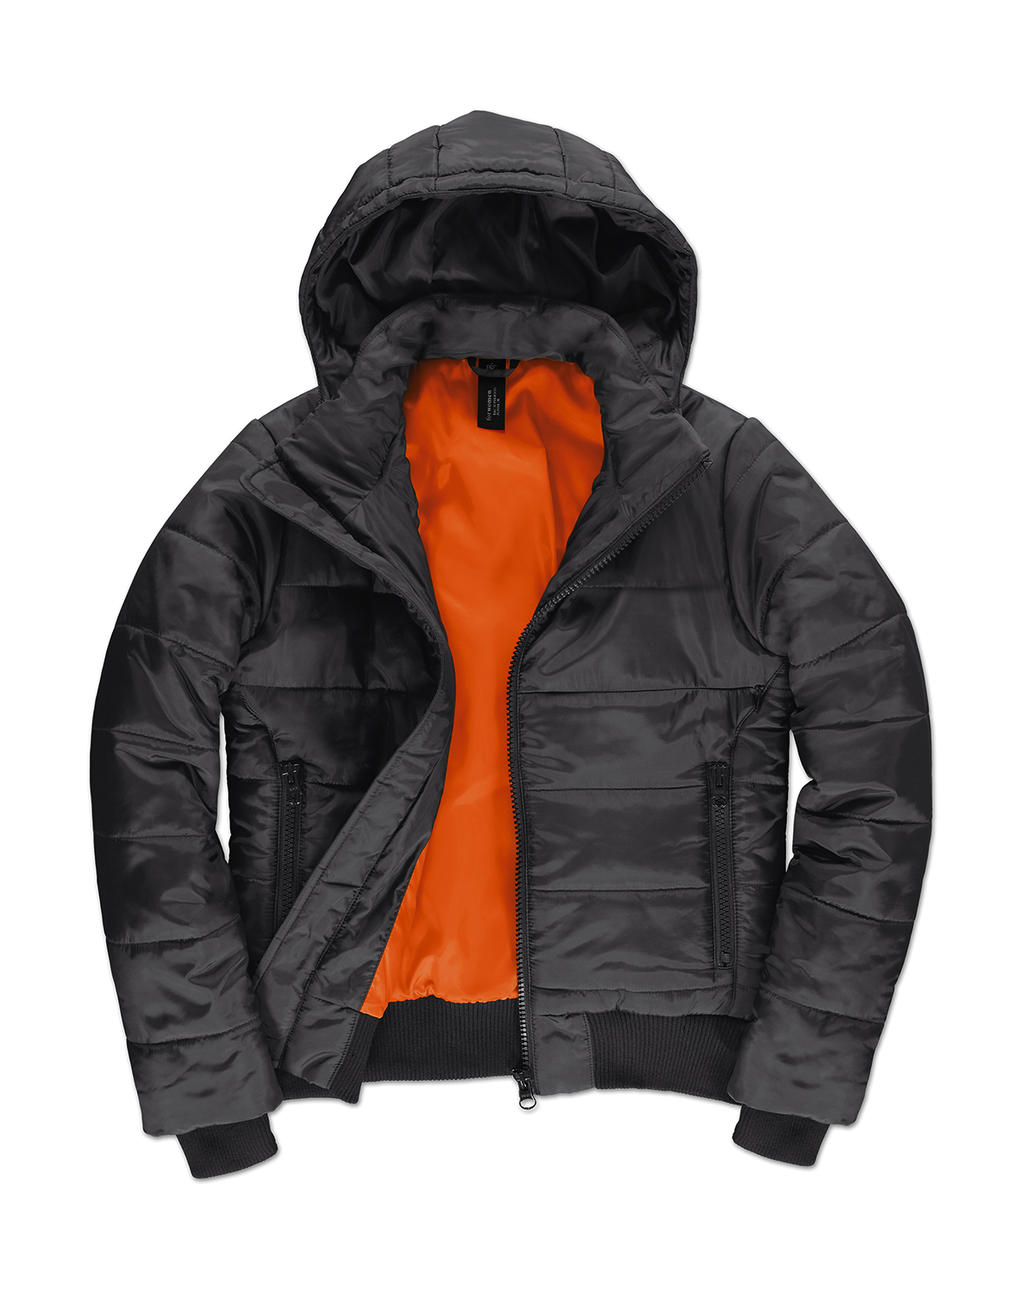  Superhood/women Jacket in Farbe Dark Grey/Neon Orange